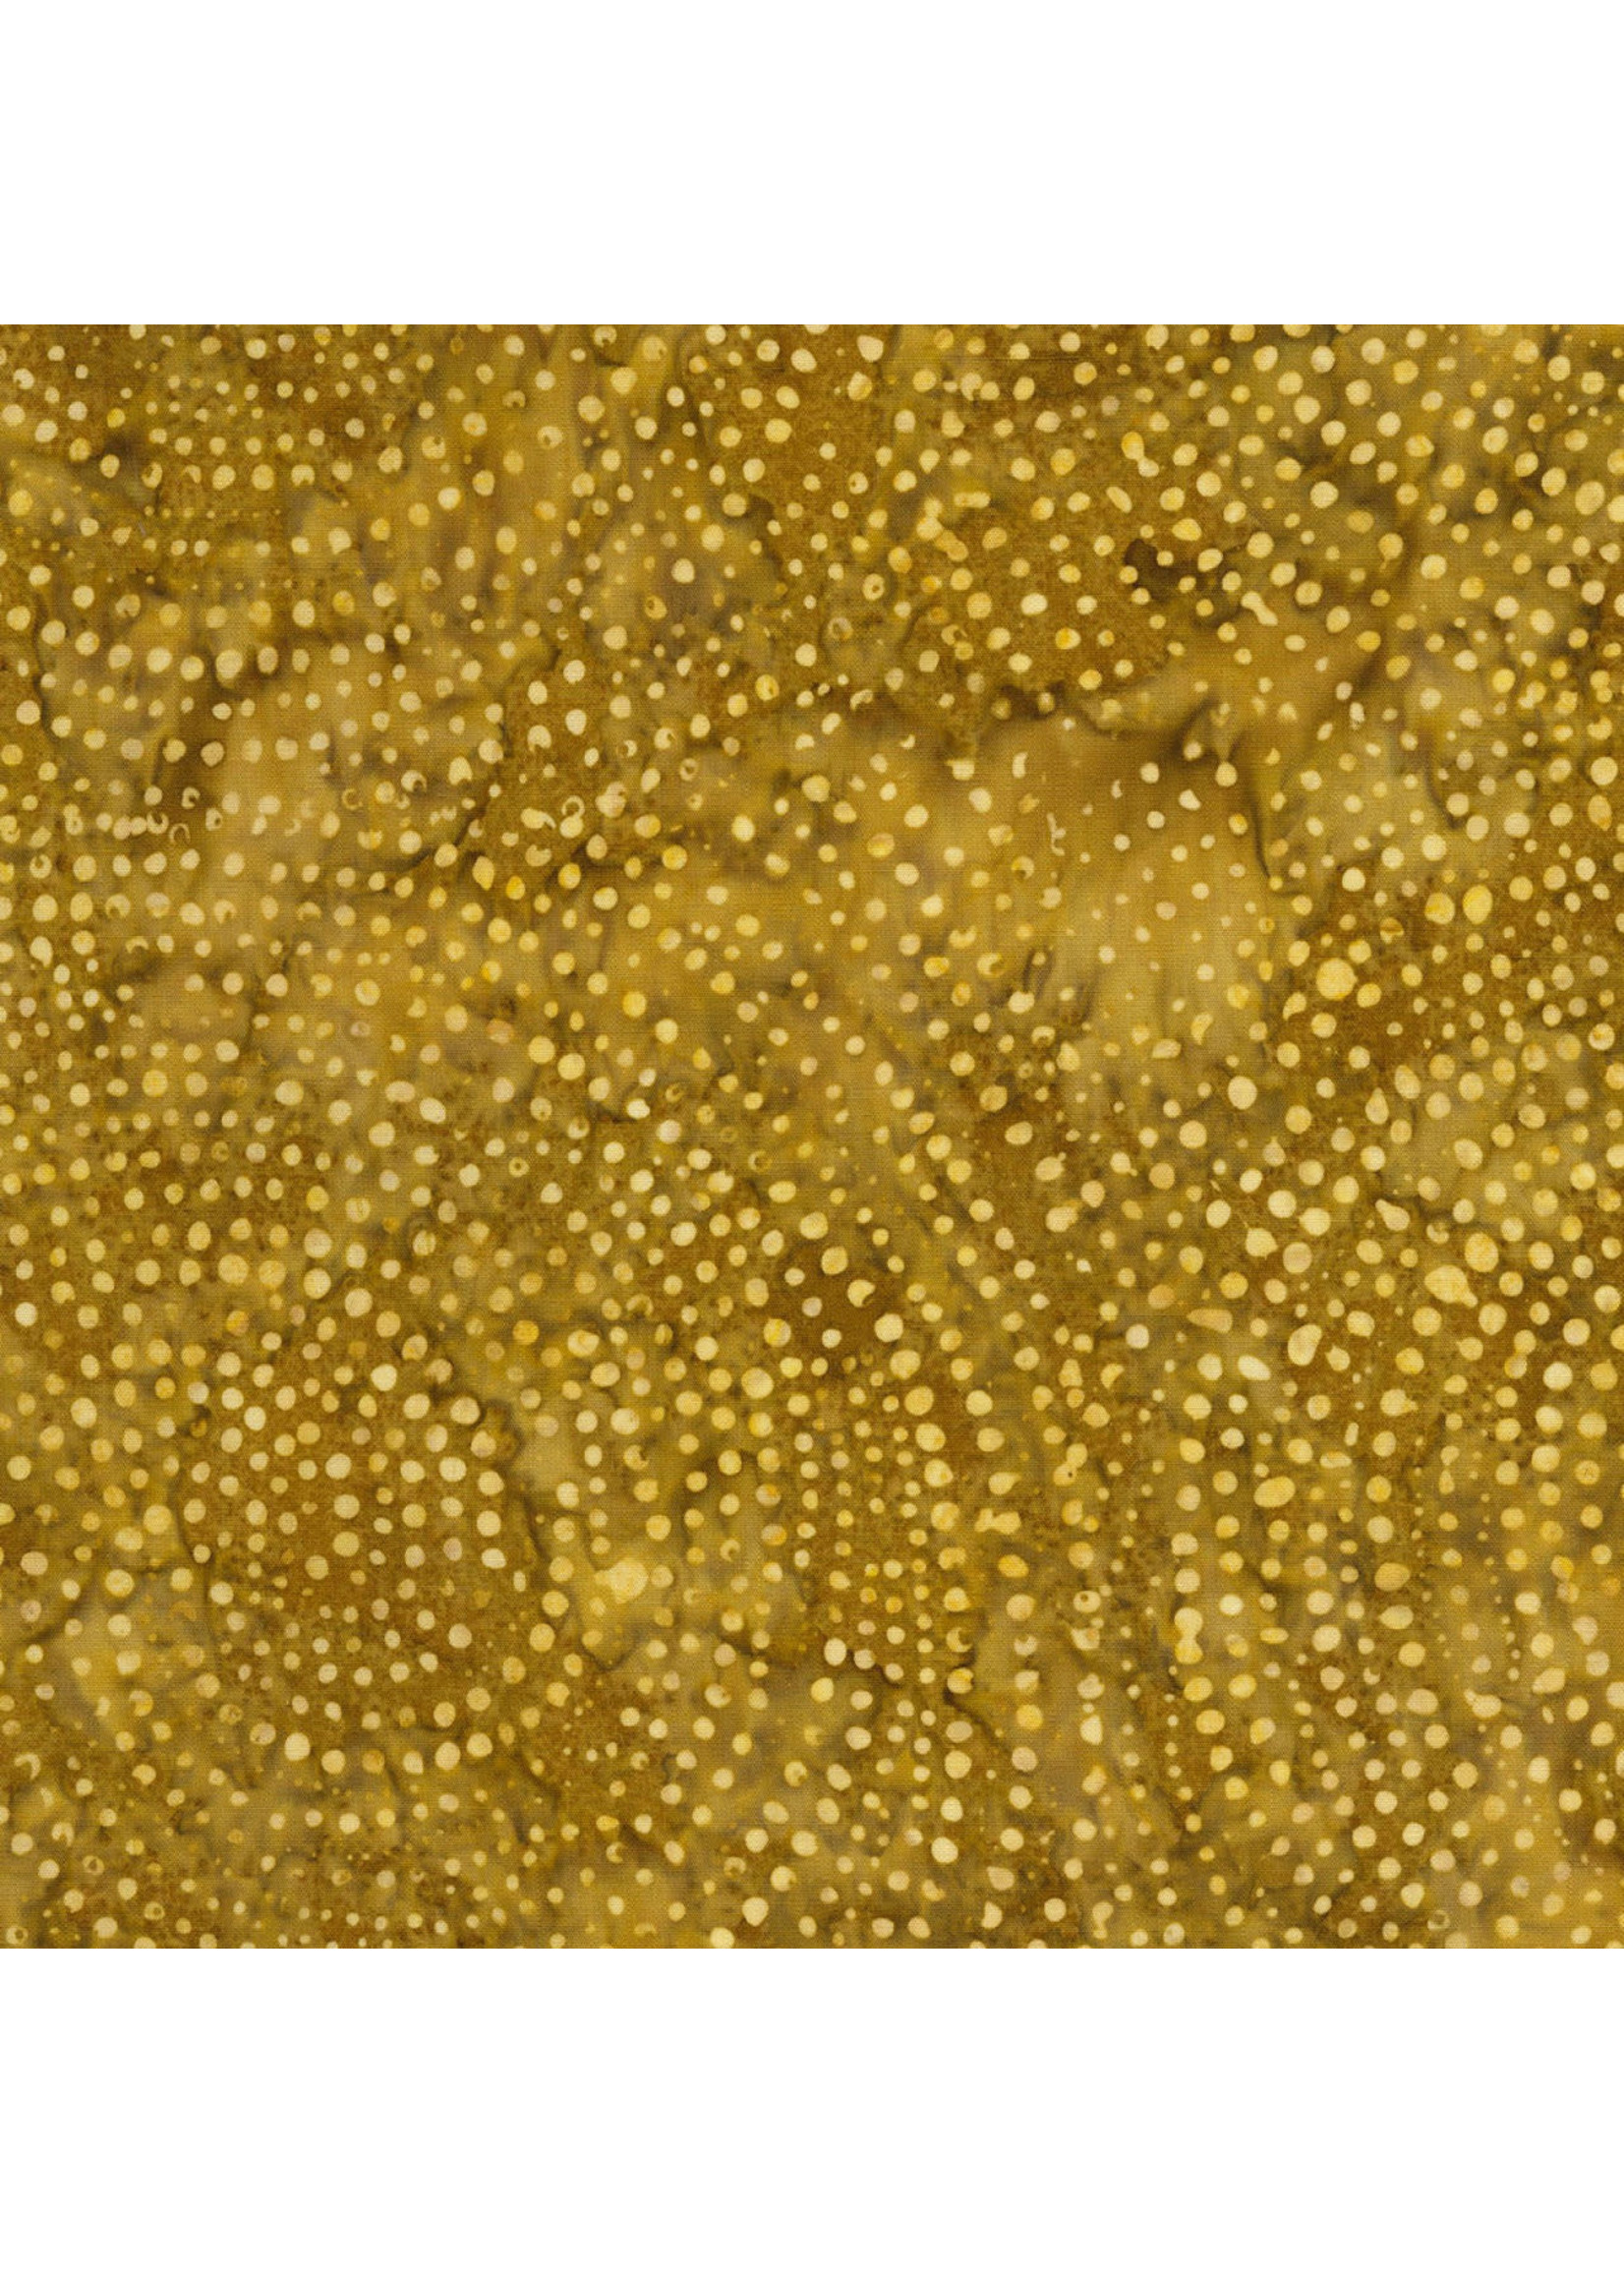 Timeless Treasures Tonga - Dotty Spiral - Gold